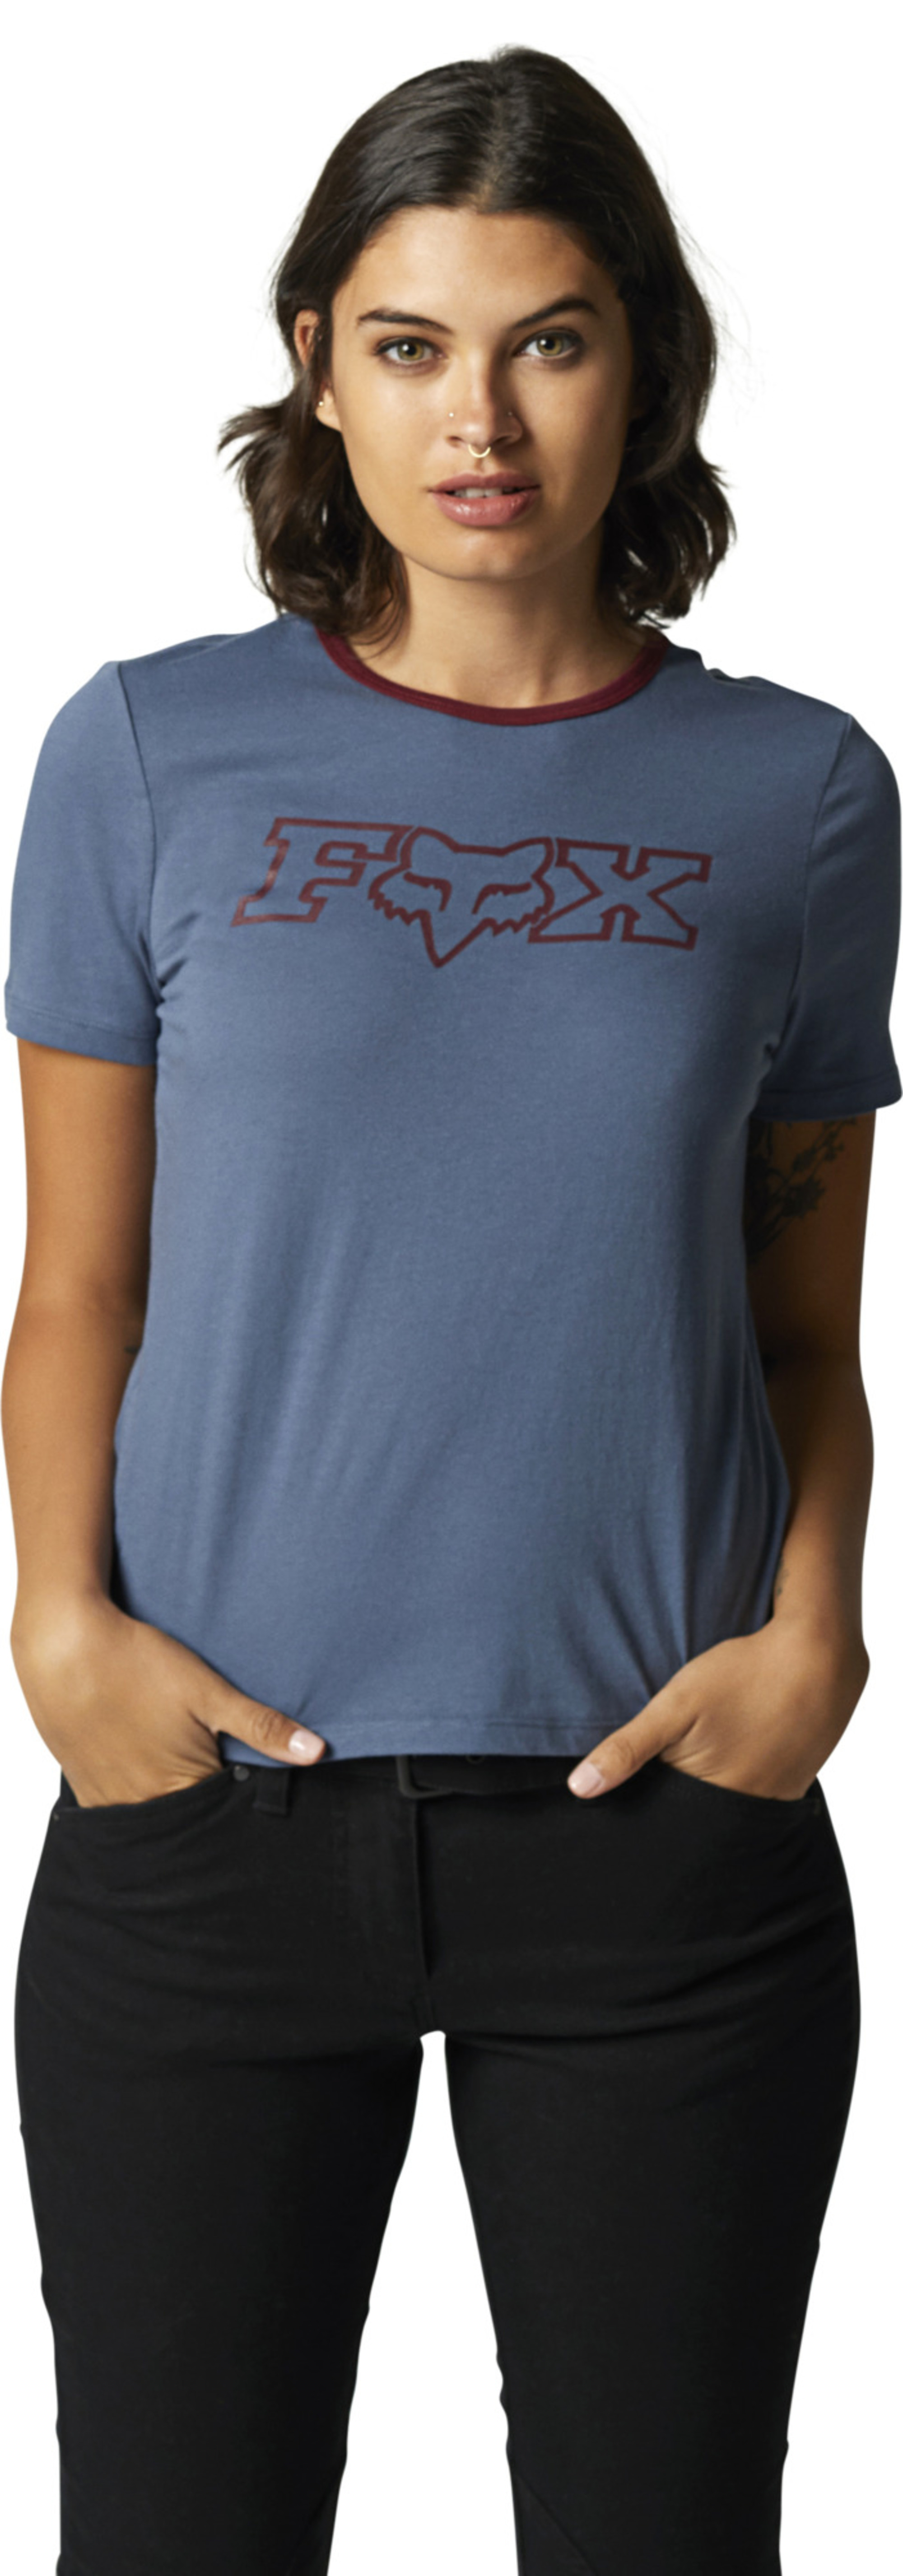 fox racing t-shirt shirts for womens kickstart